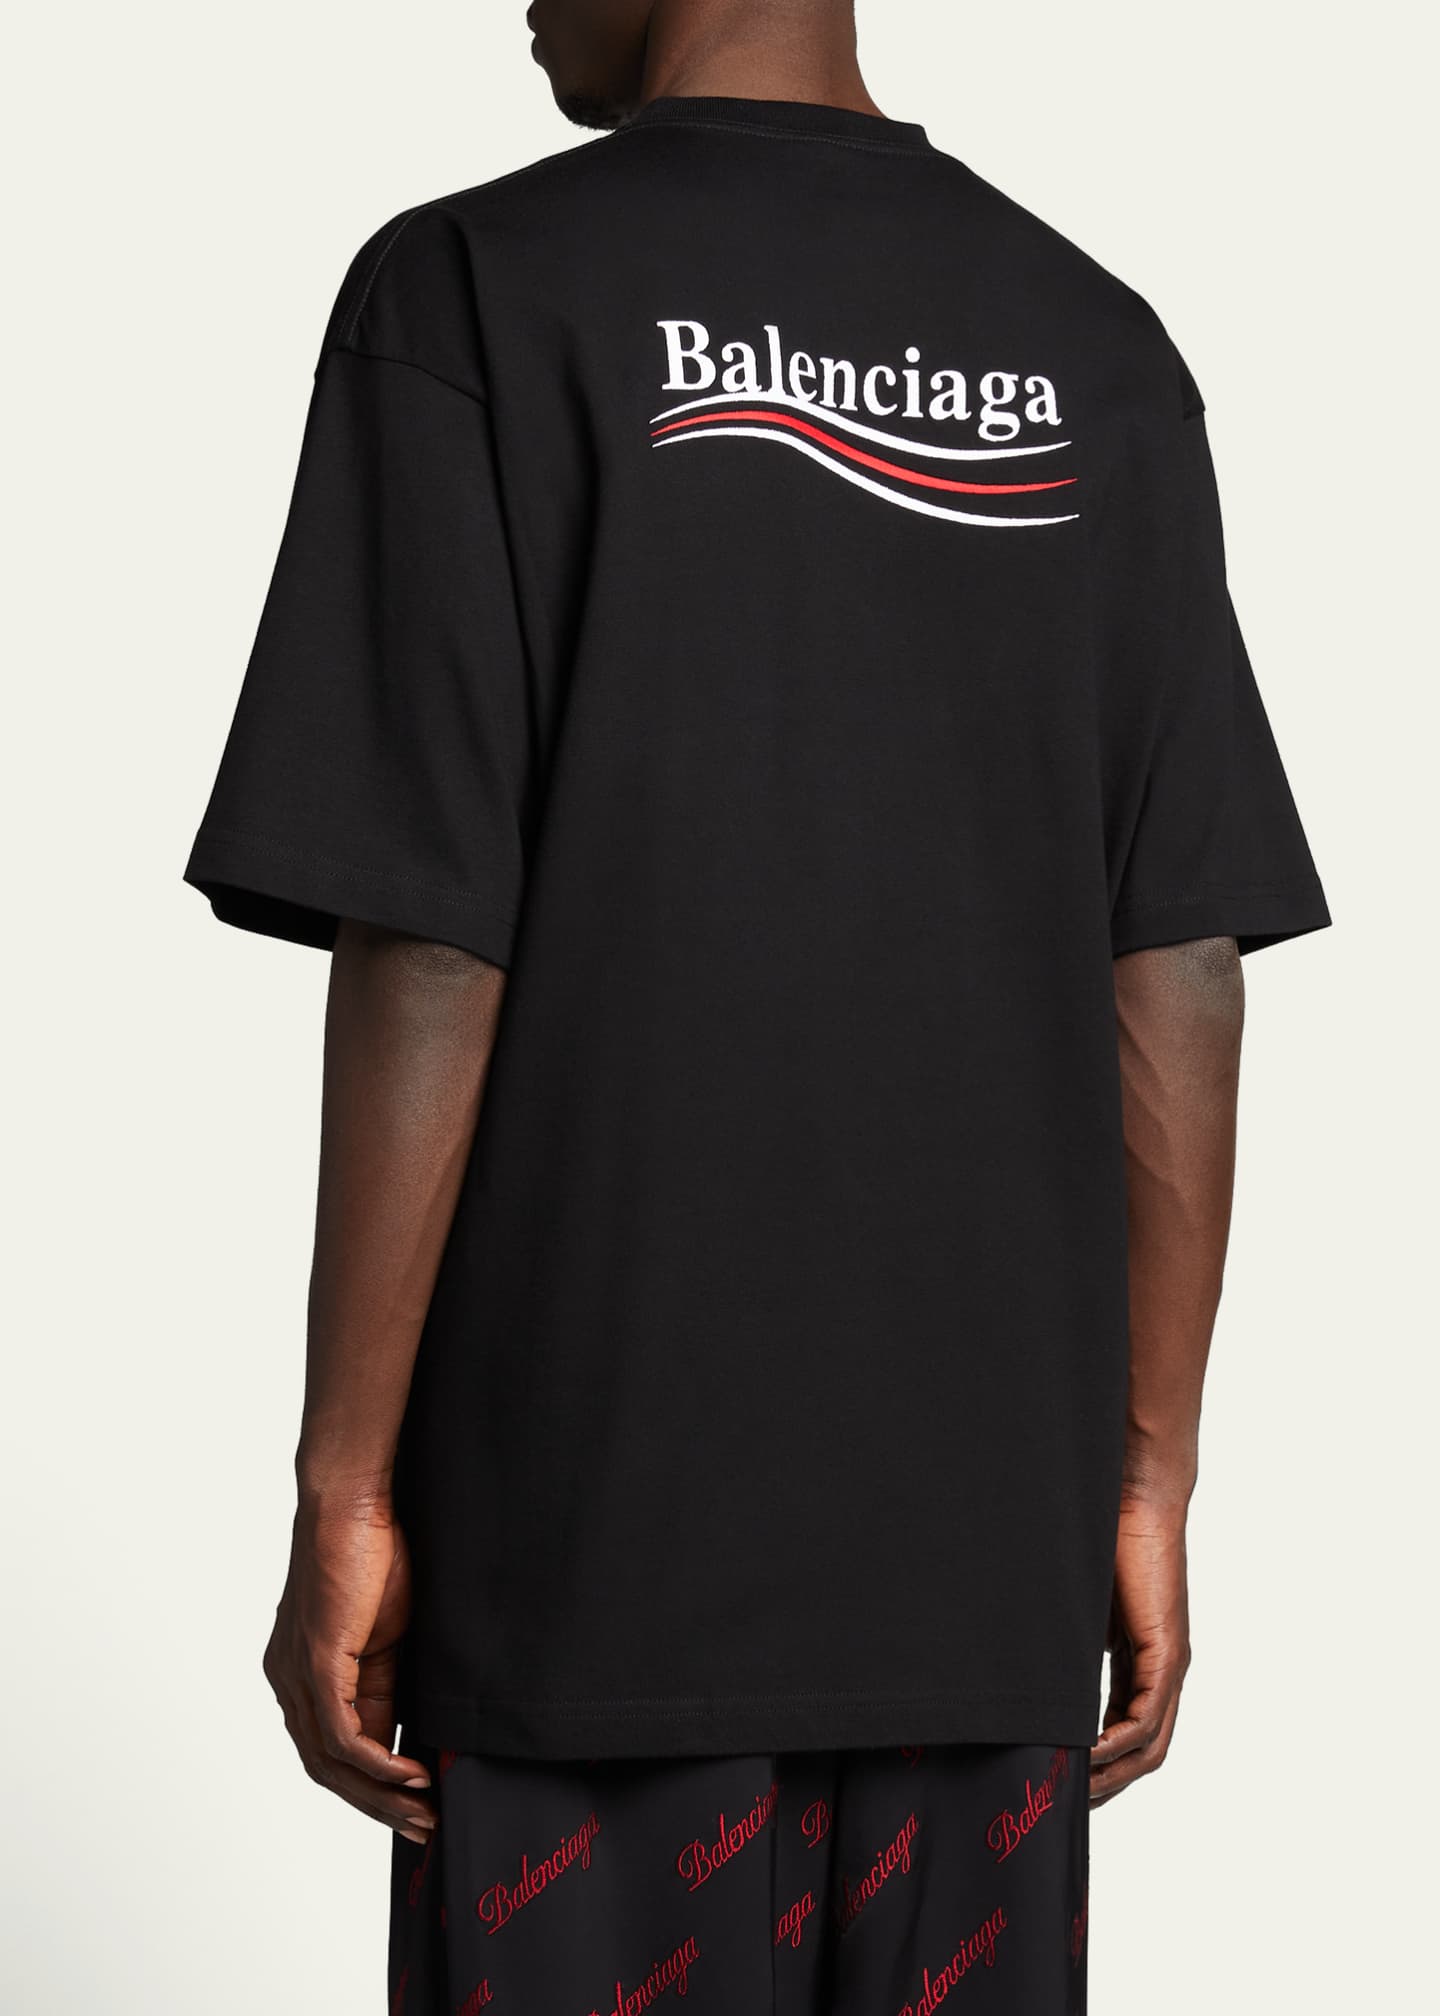 BALENCIAGA, Black Men's T-shirt